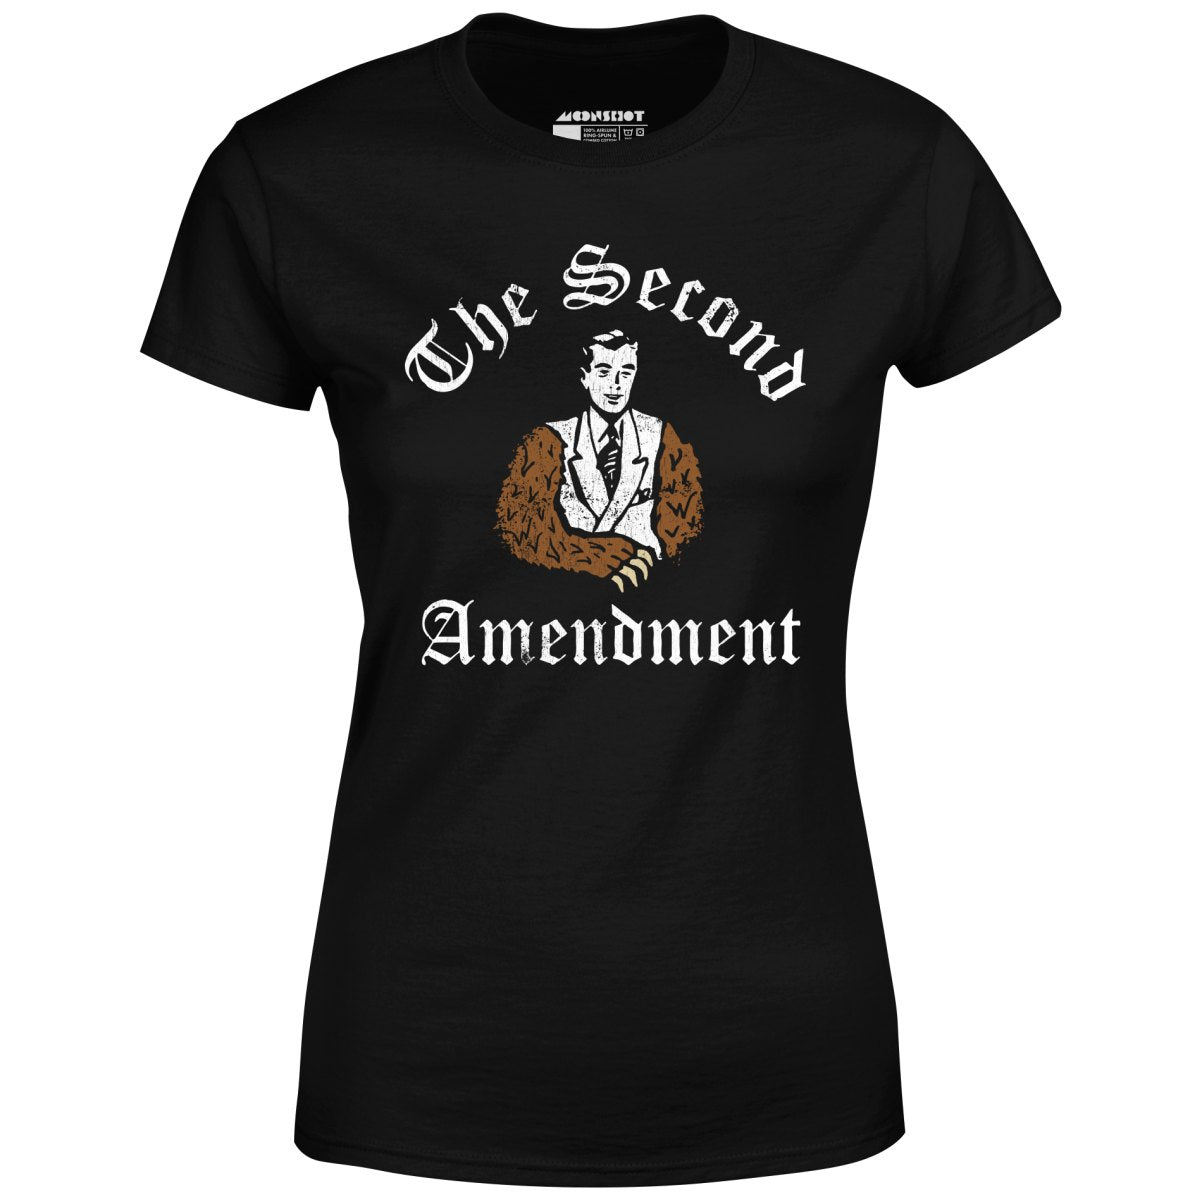 2nd Amendment - Right to Bear Arms - Women's T-Shirt